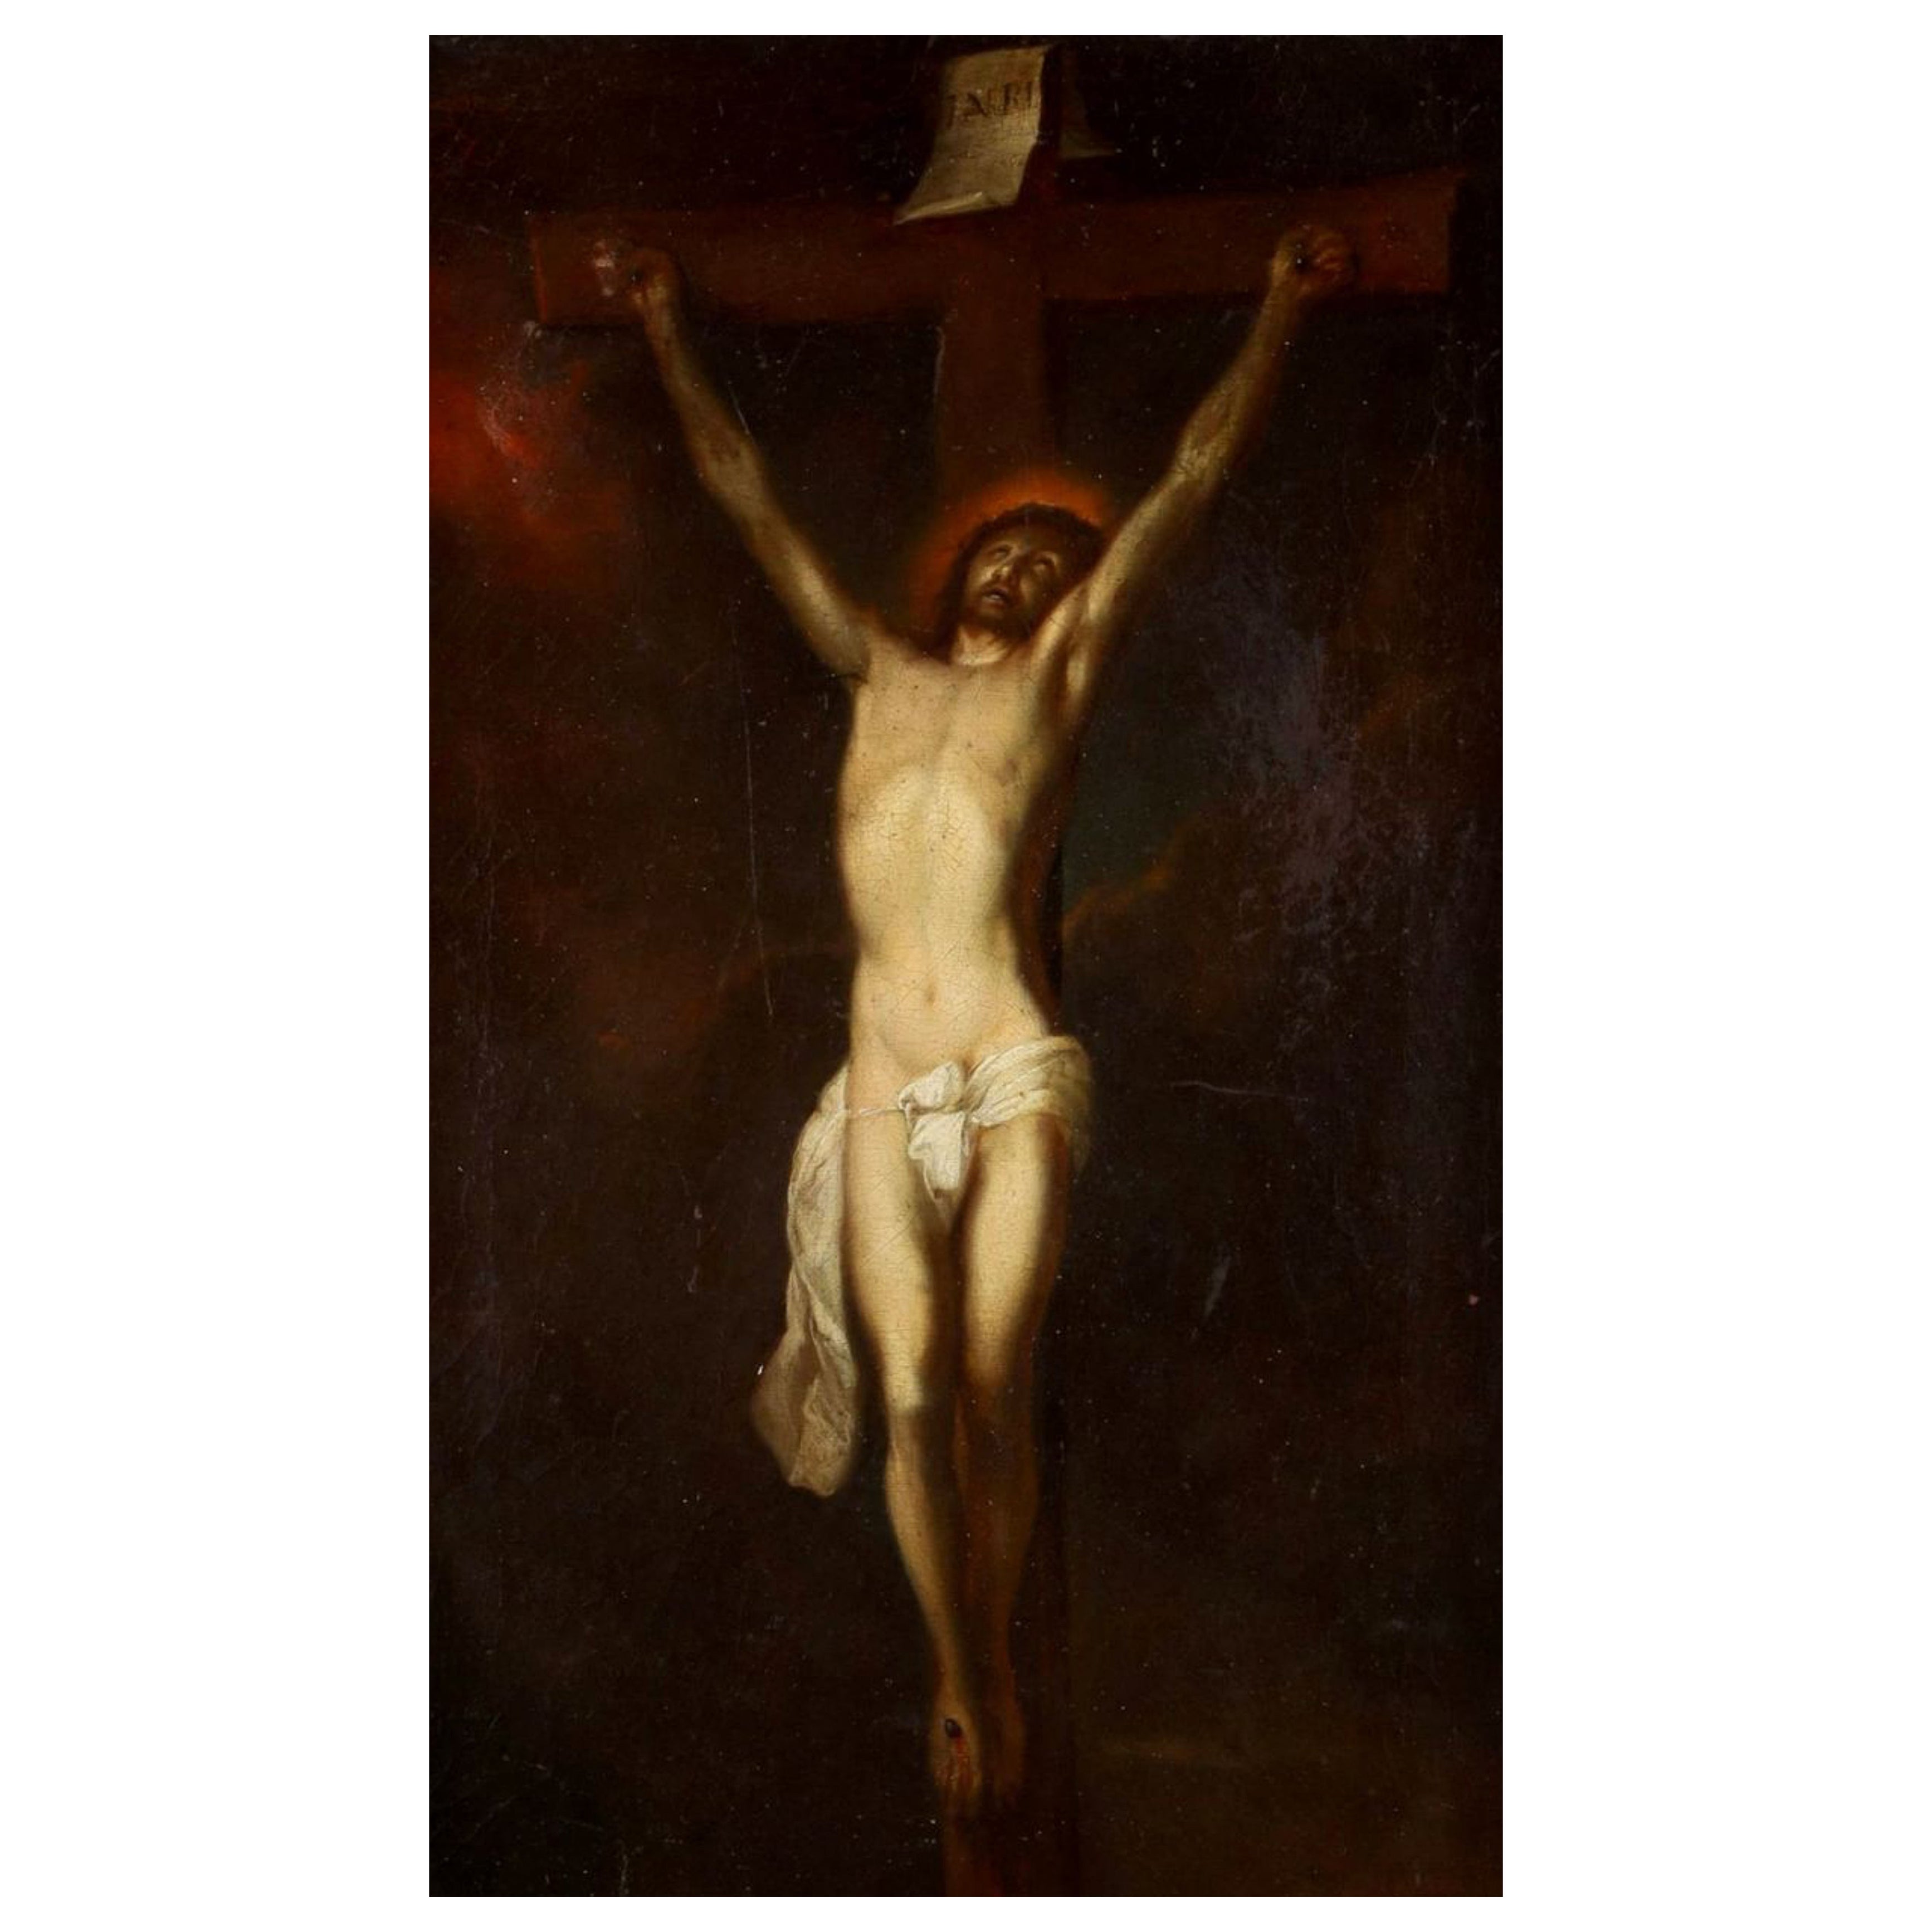 17th century Italian School  "Crucifix"